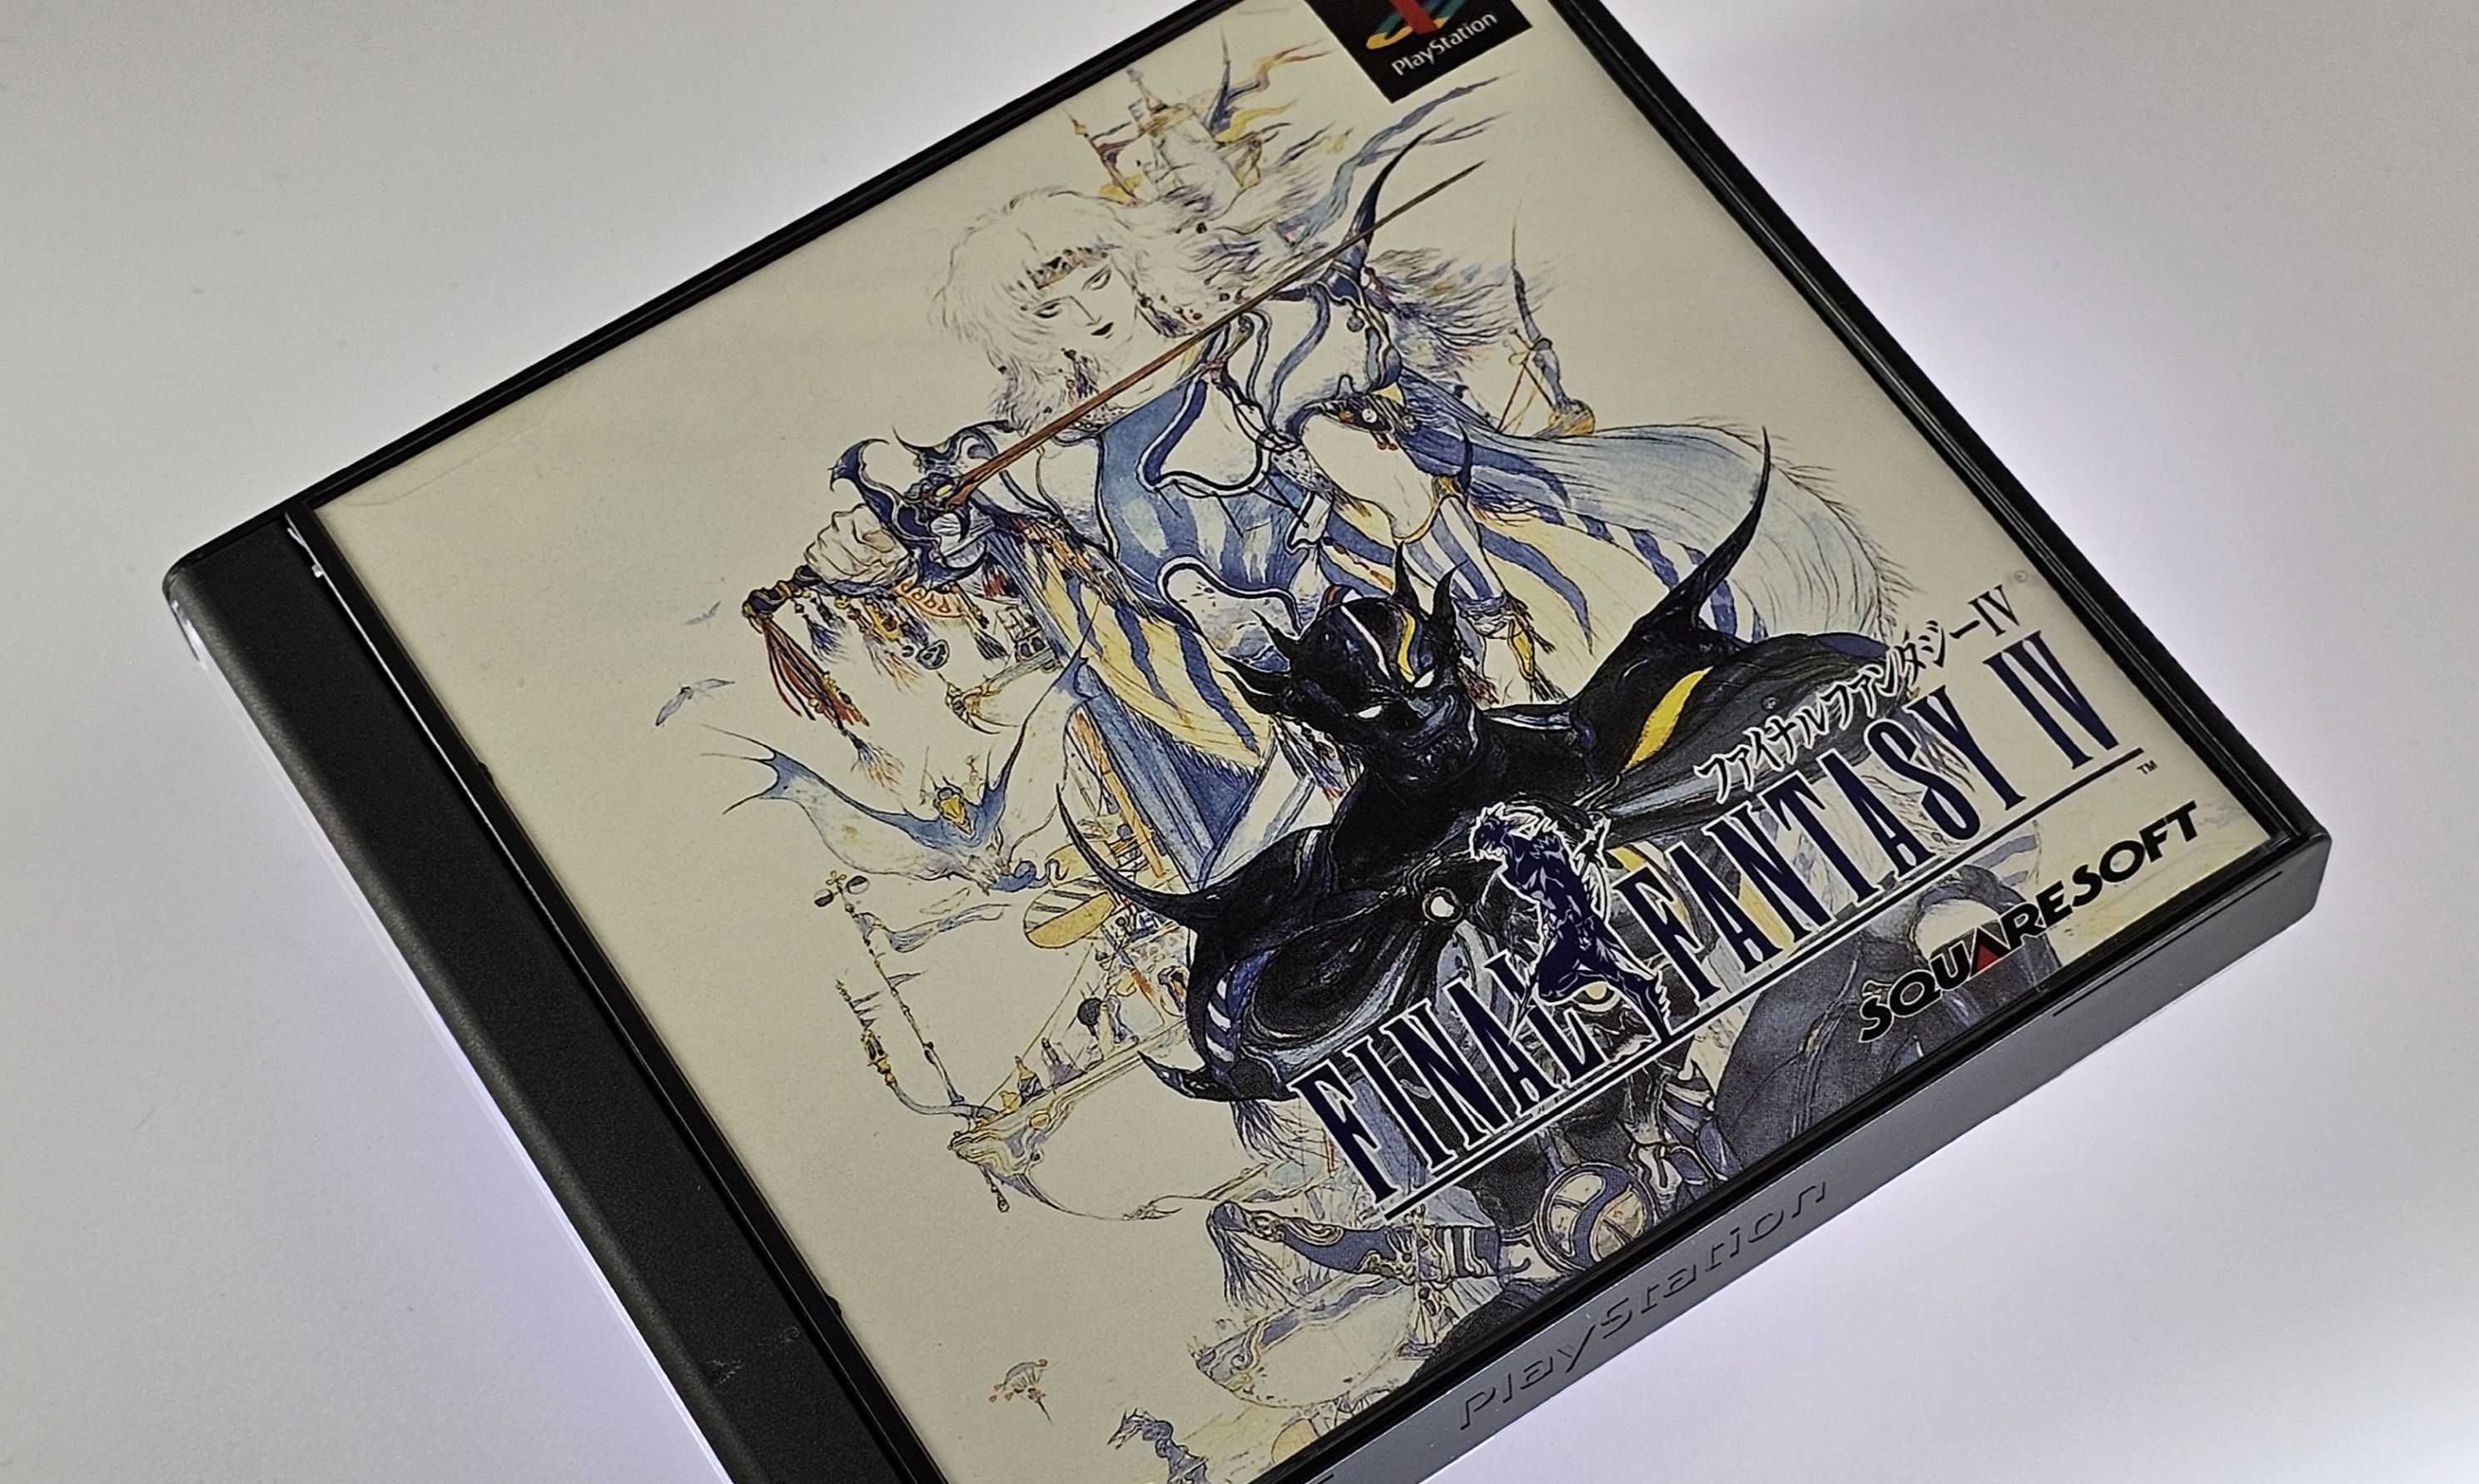 Playstation Final Fantasy IV FFIV  ! weekendowa promocja na gry